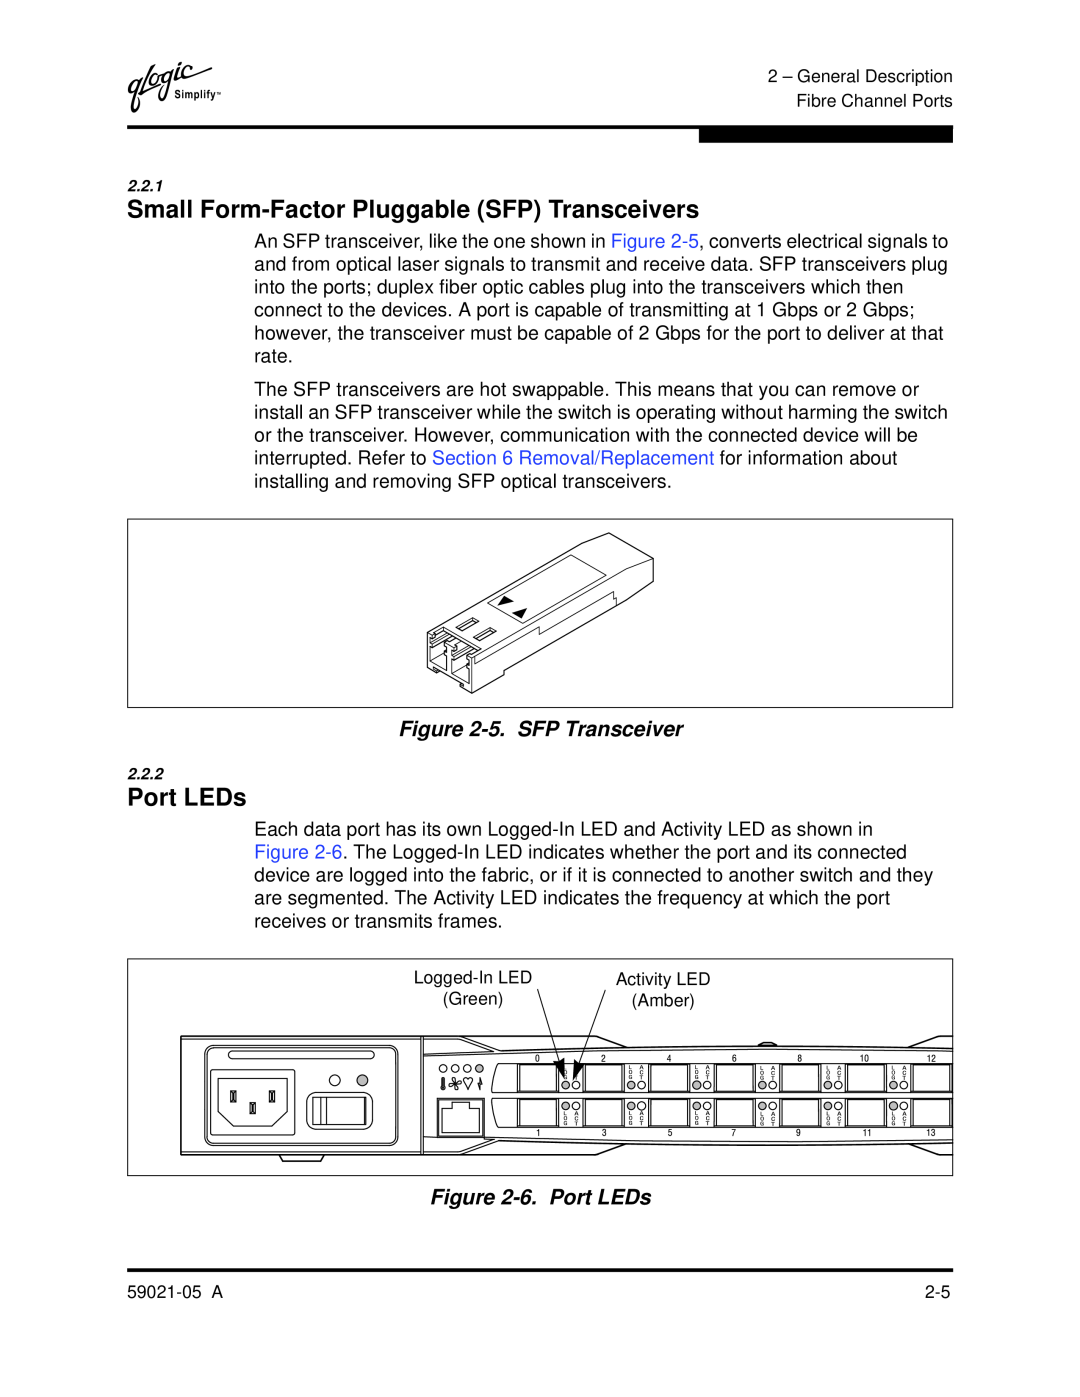 Q-Logic 59021-05 manual Small Form-Factor Pluggable SFP Transceivers, 5. SFP Transceiver, 6. Port LEDs 